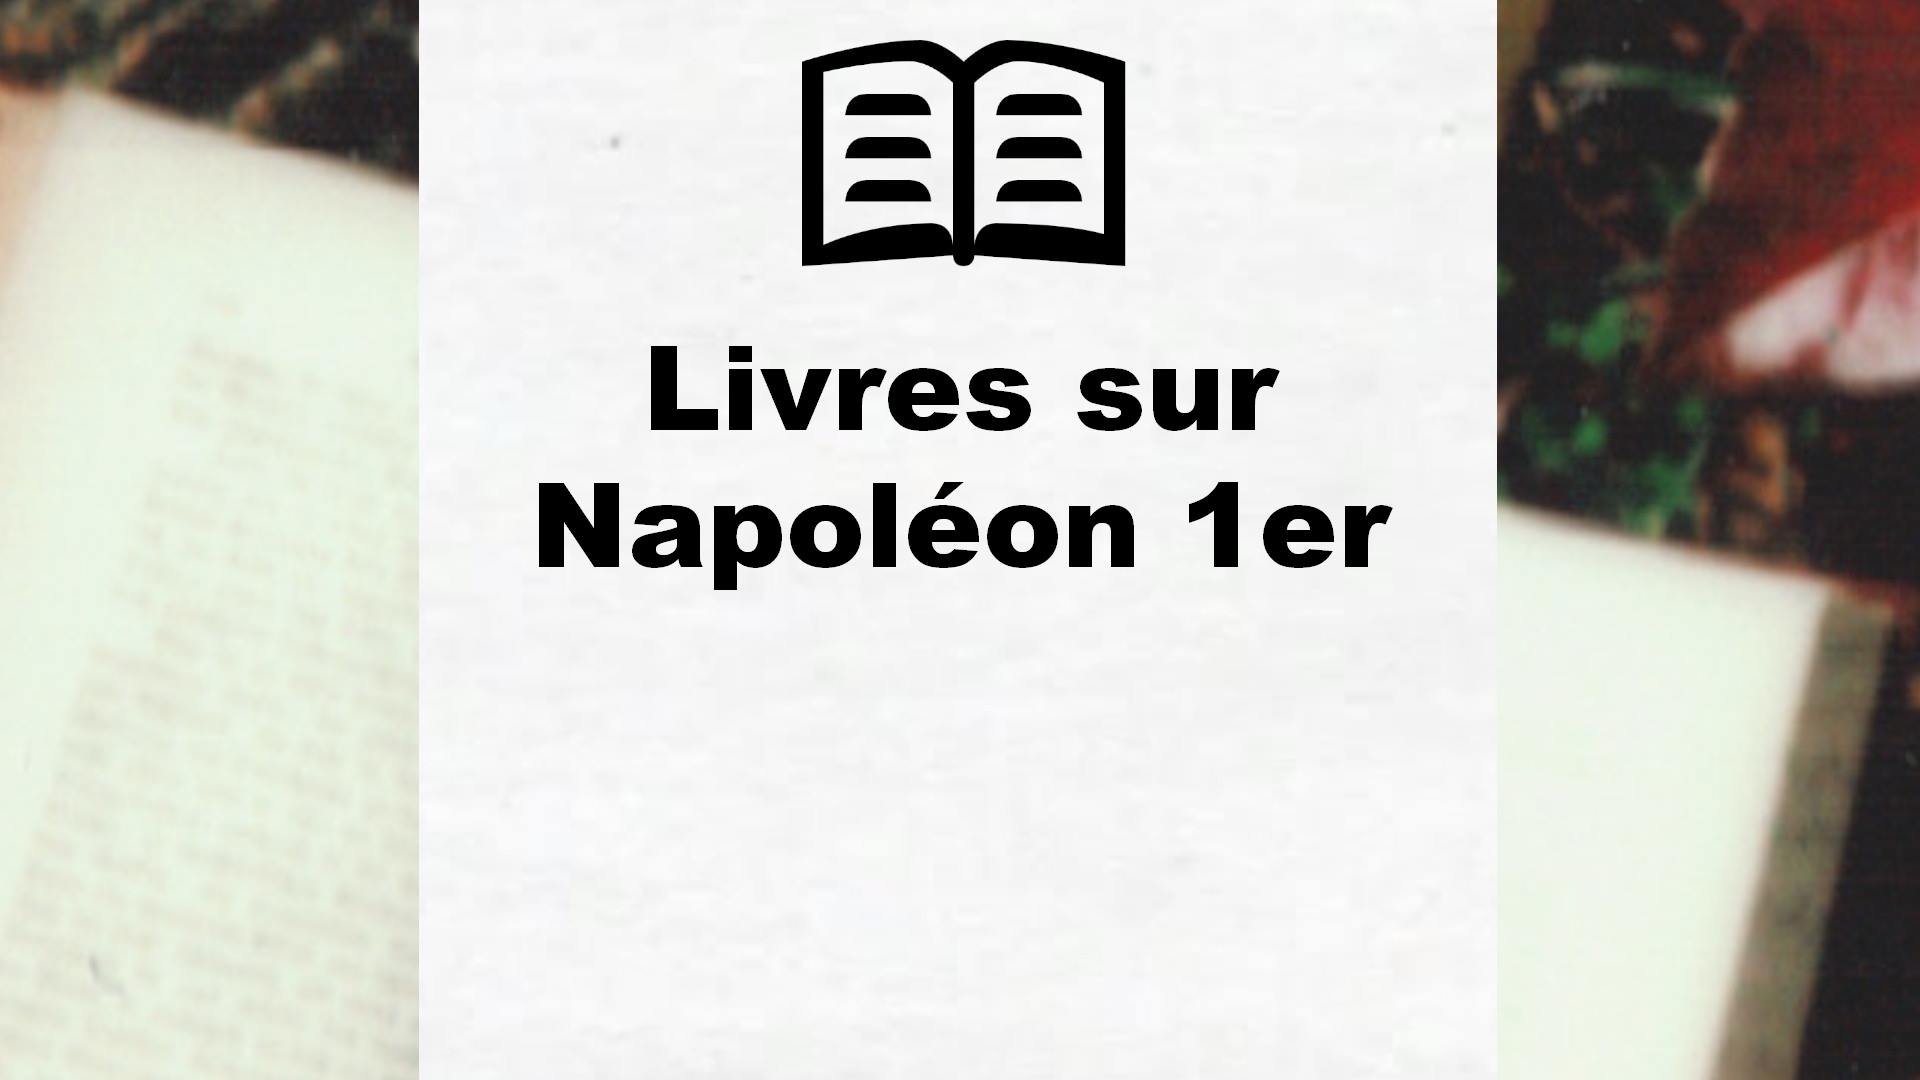 Livres sur Napoléon 1er